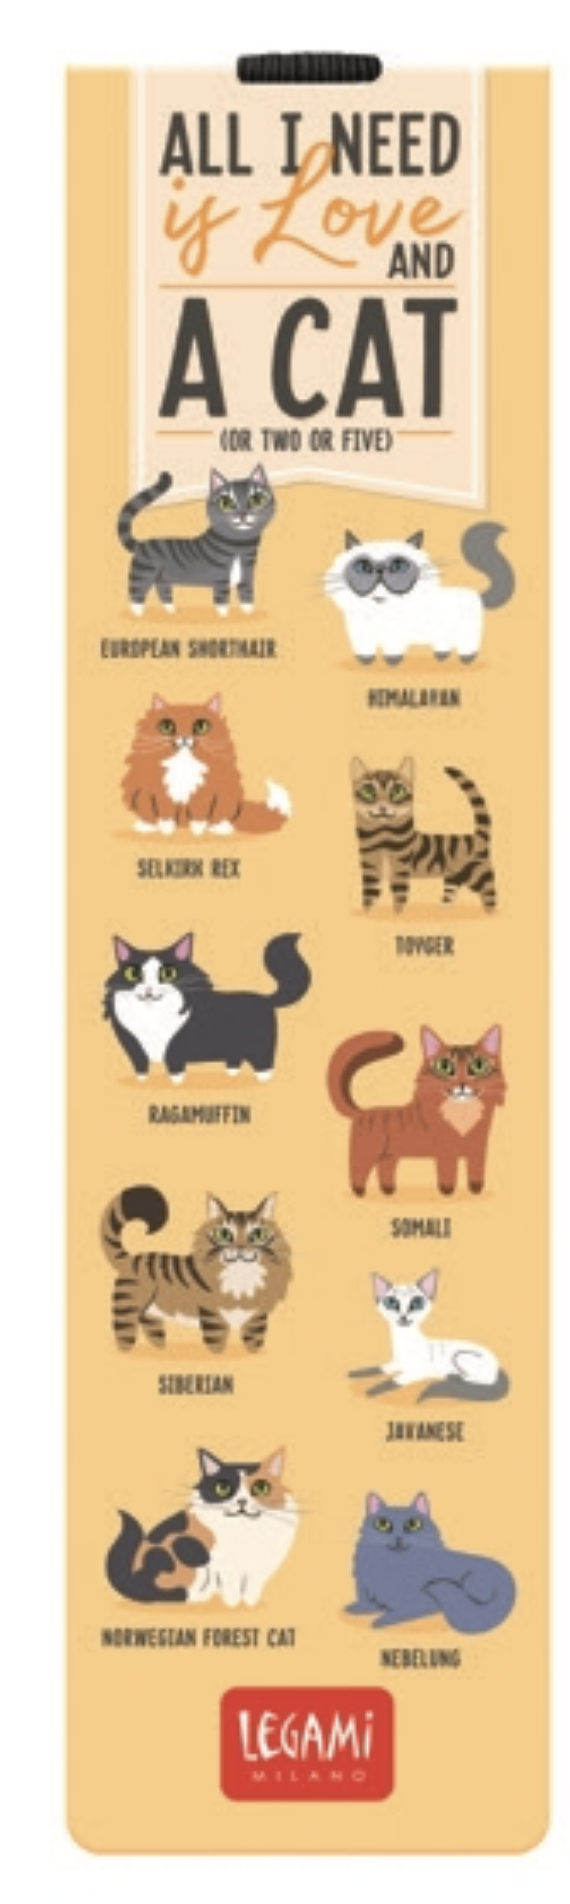 Bookmark - Cats